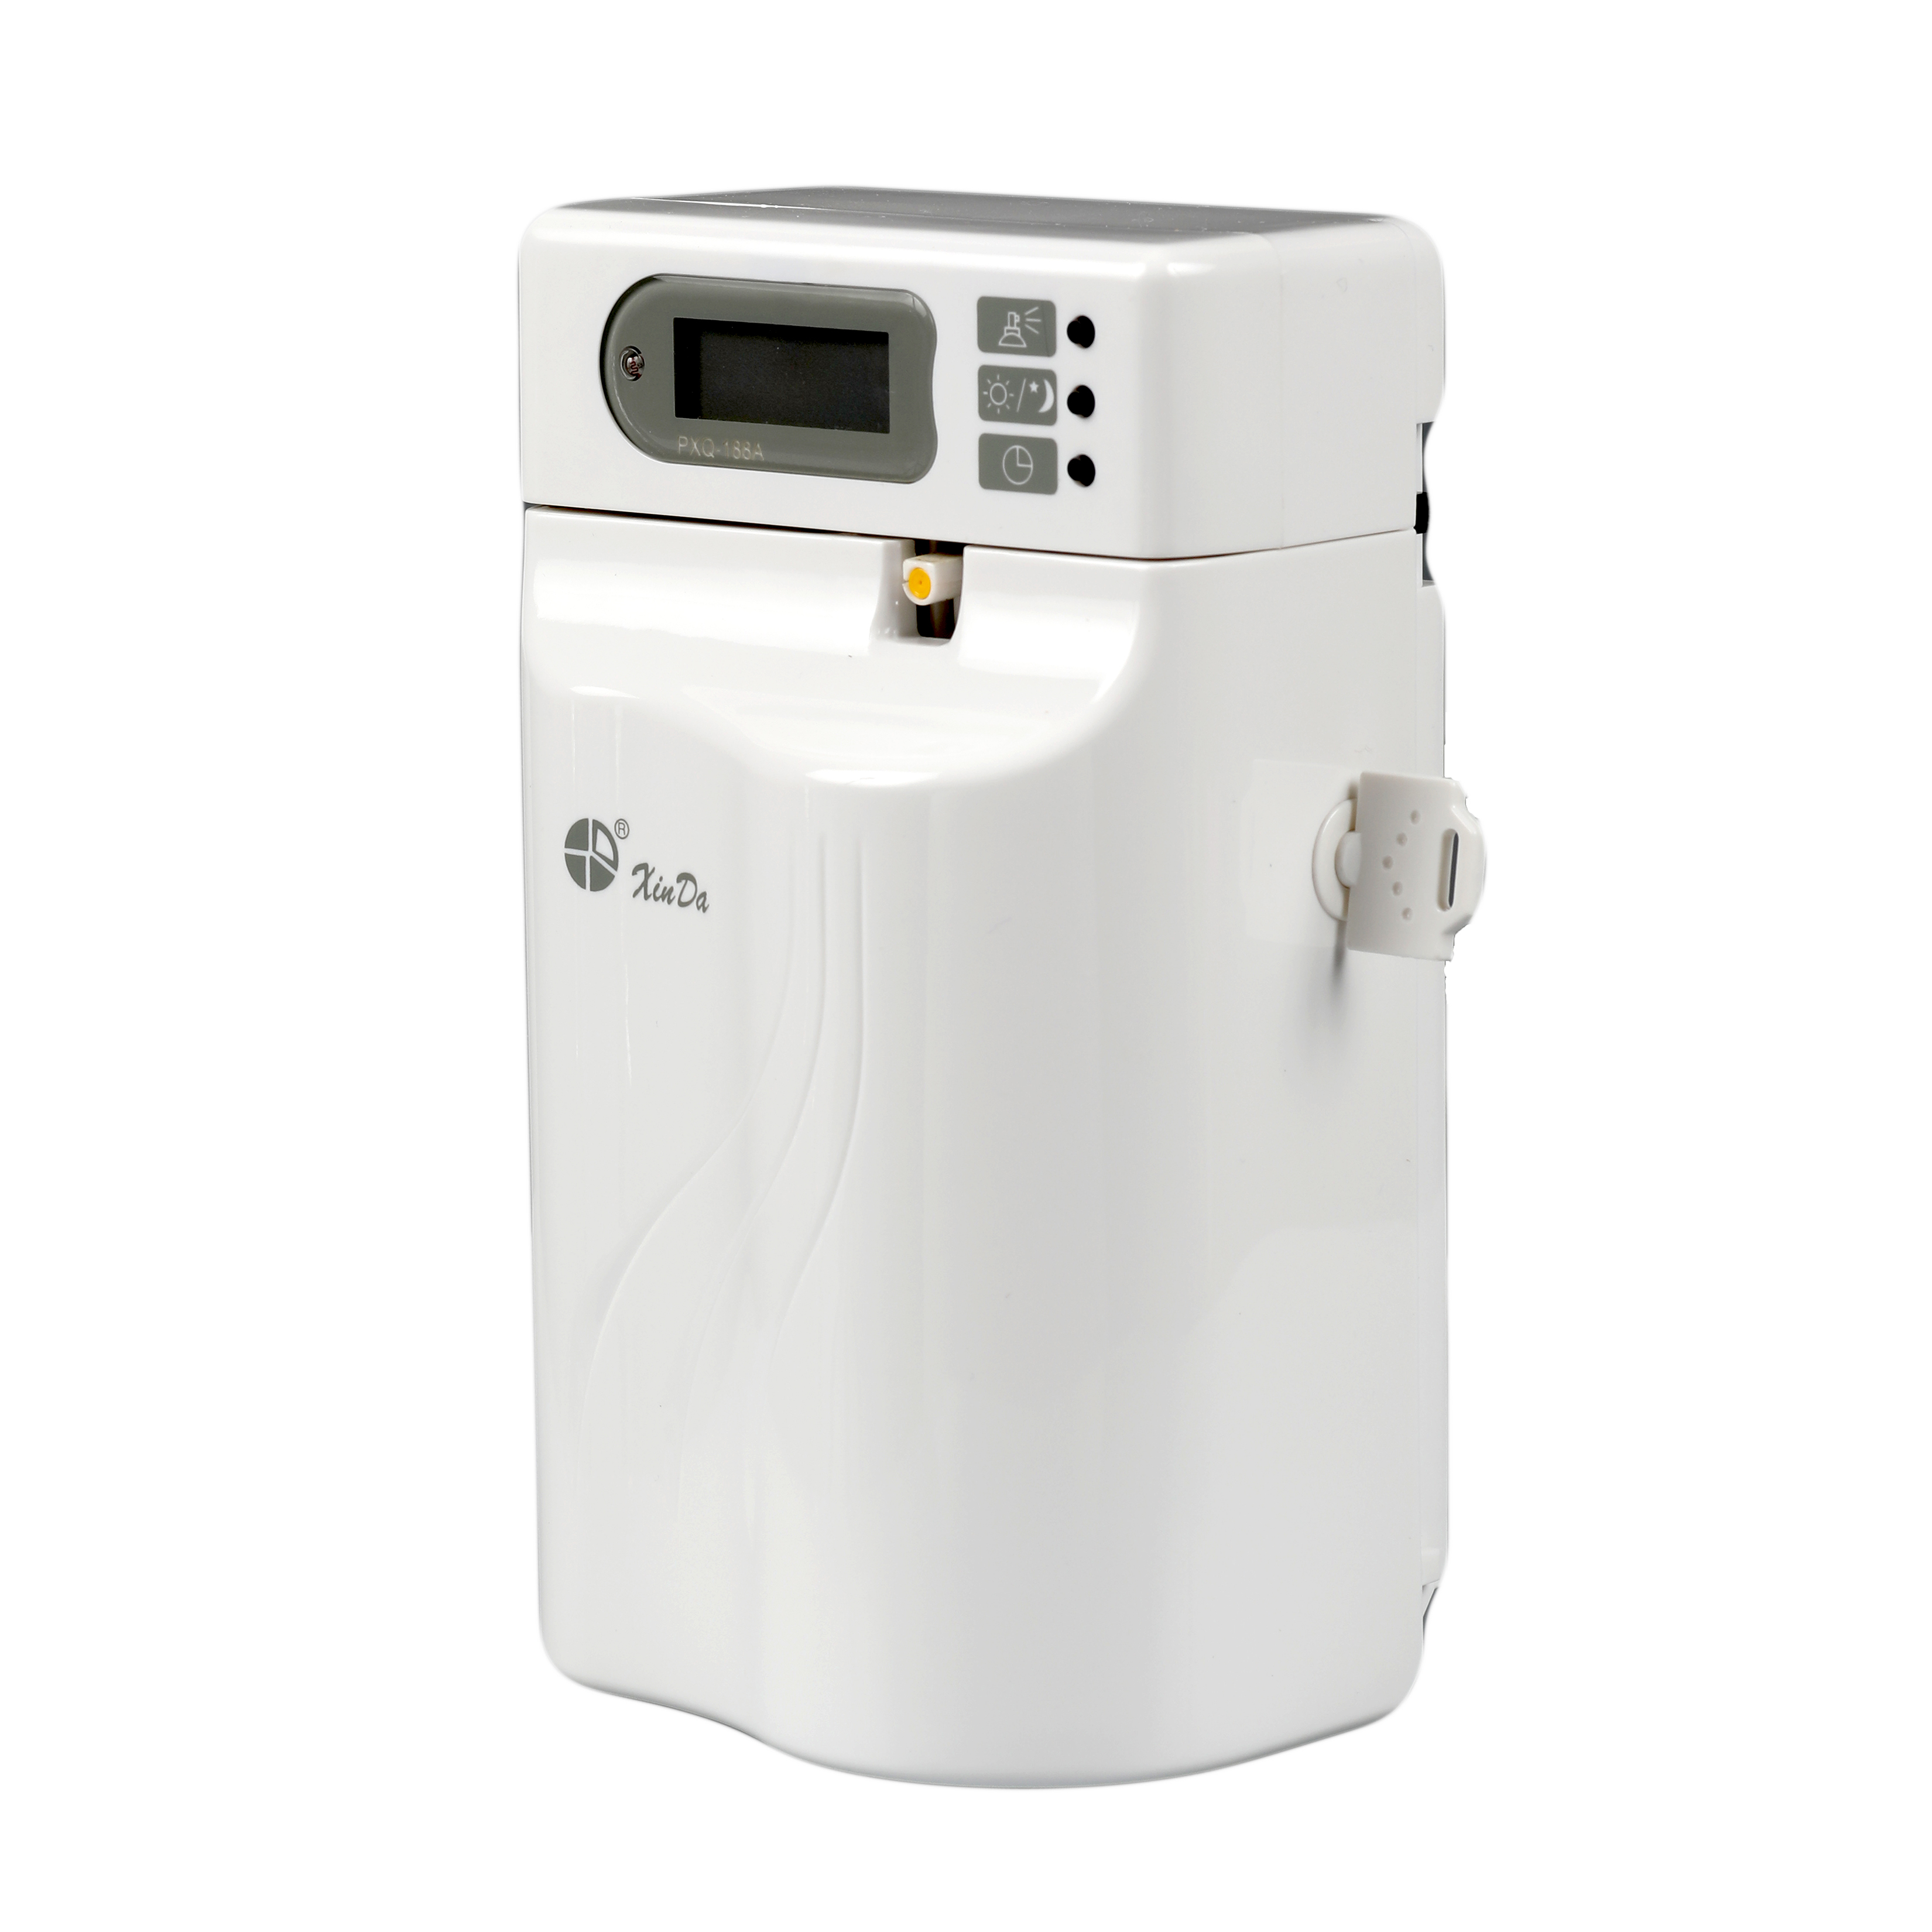 Xinda PXQ 188A Automatic Perfume Aerosol Dispenser Key-Lock Protection Wall Mounted